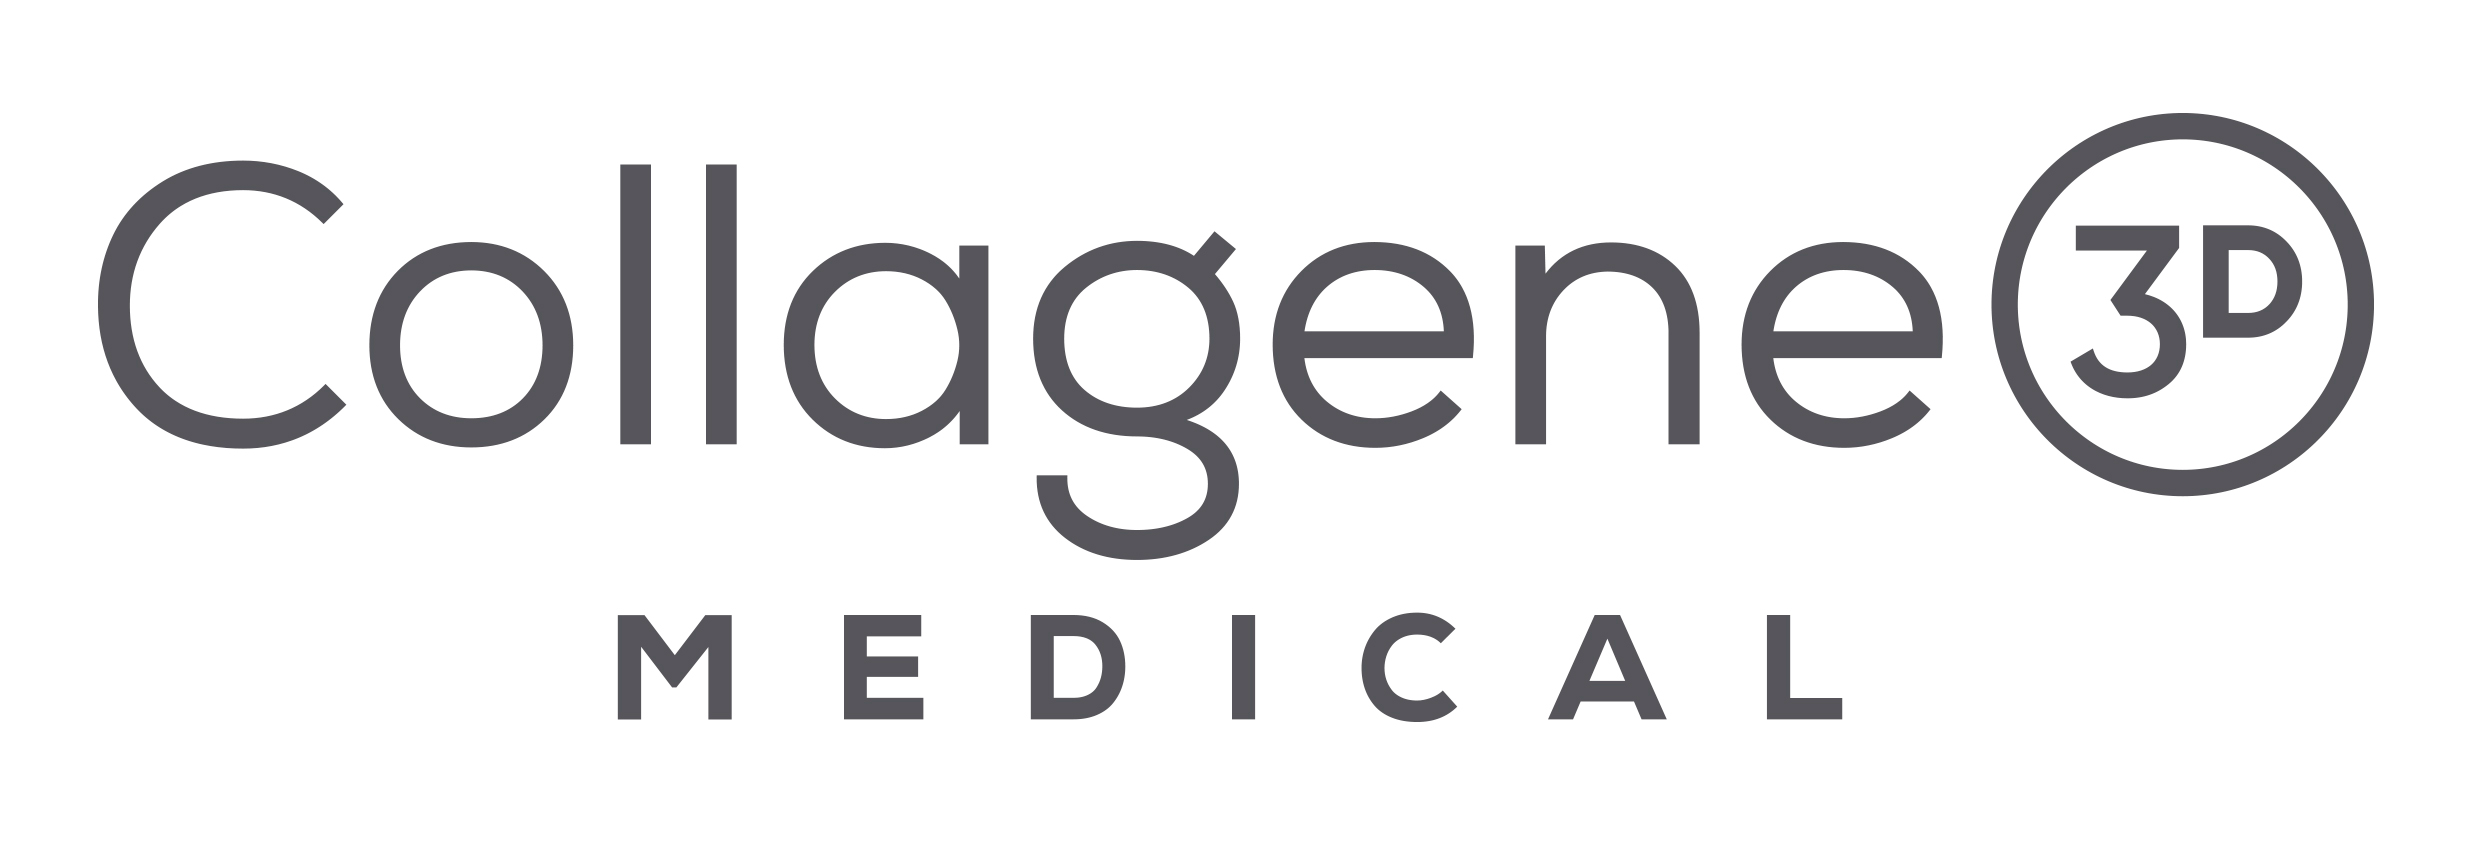 Косметика бренда MEDICAL COLLAGENE 3D, логотип